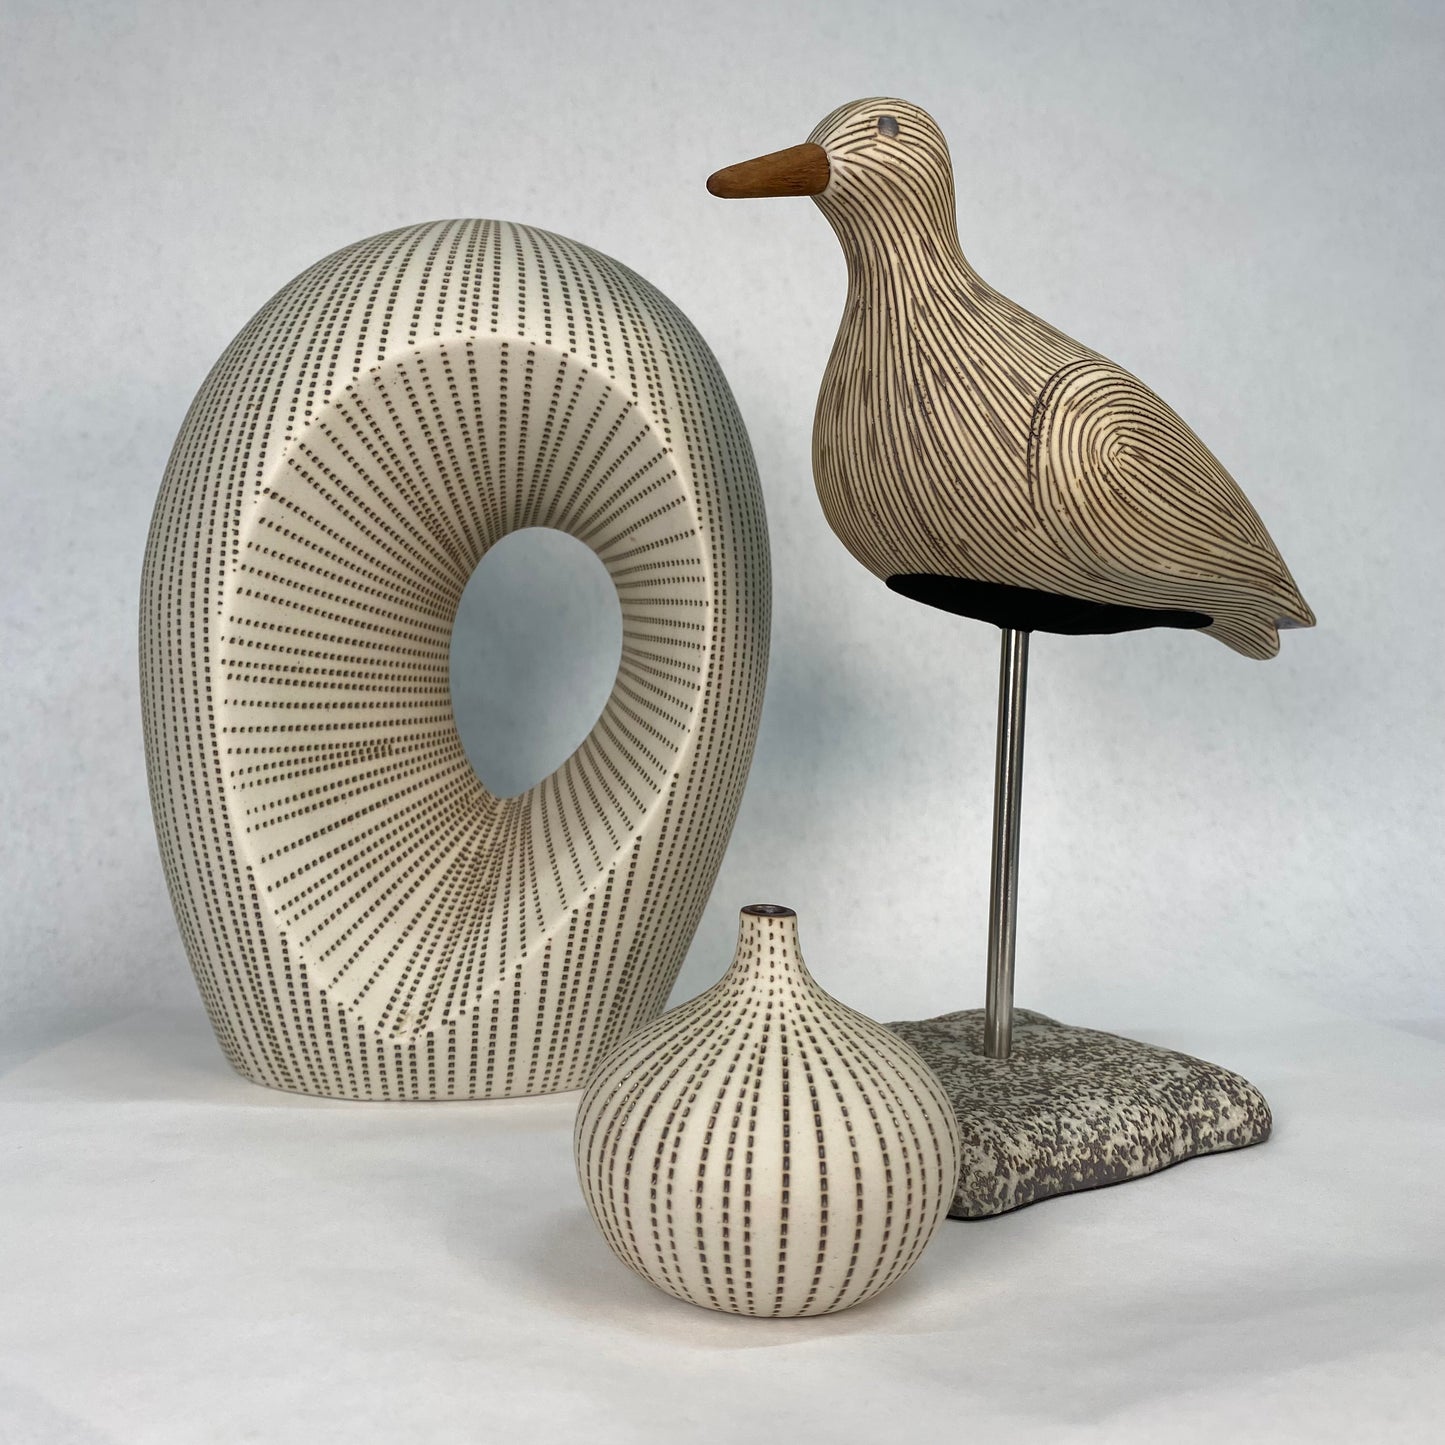 White and Brown Bird Sculpture